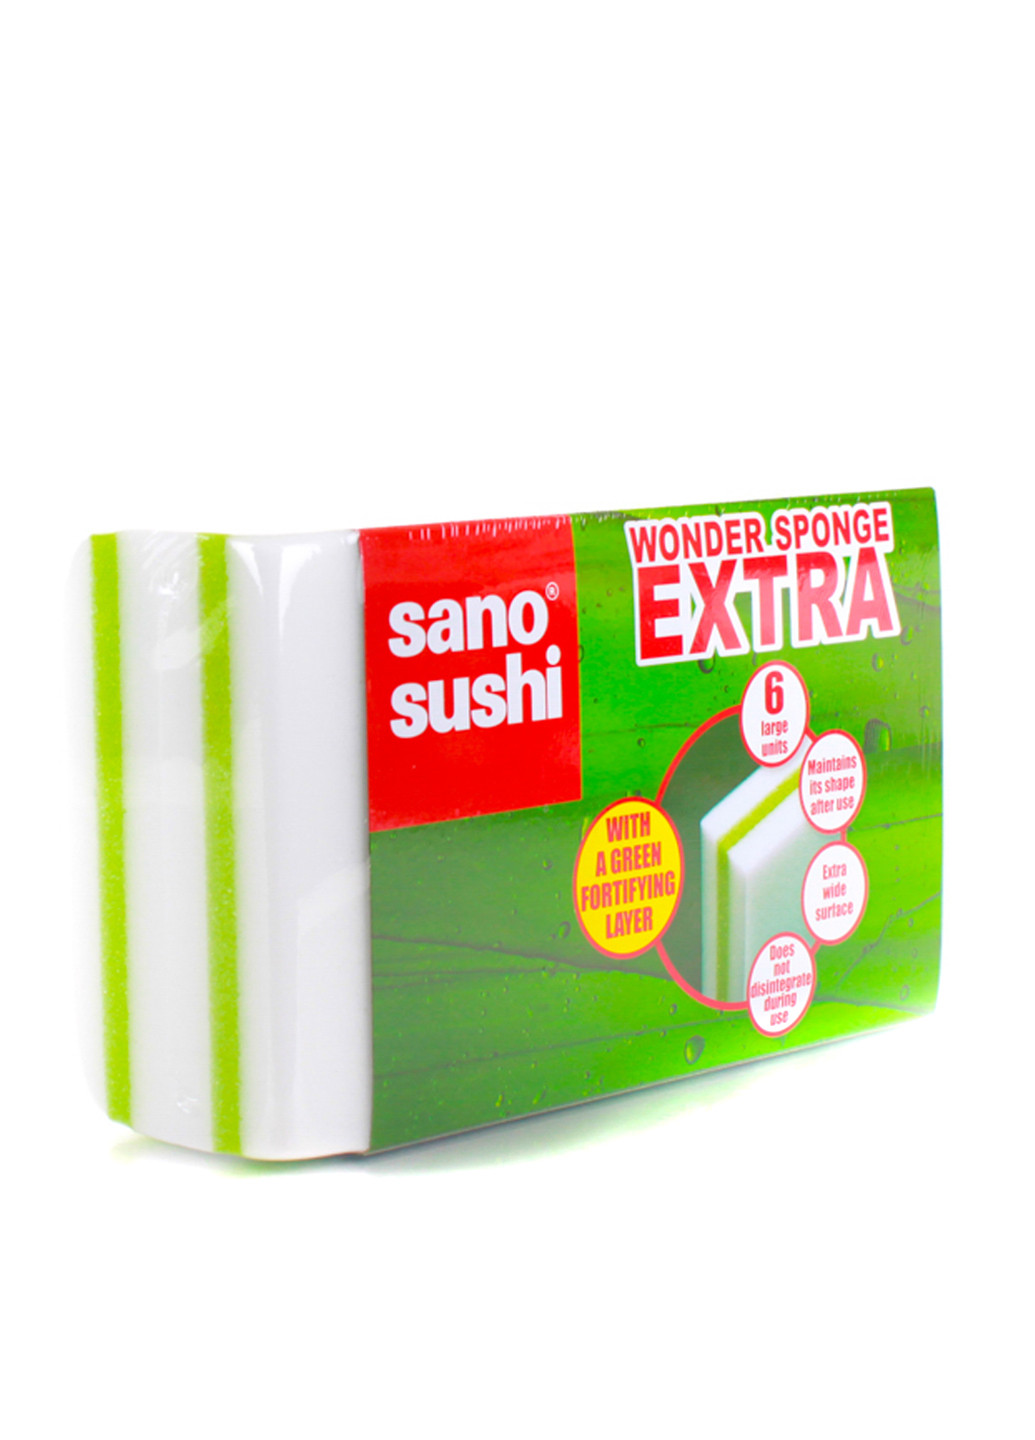 Губка Sushi Wonder Sponge Extra Sano (186499108)